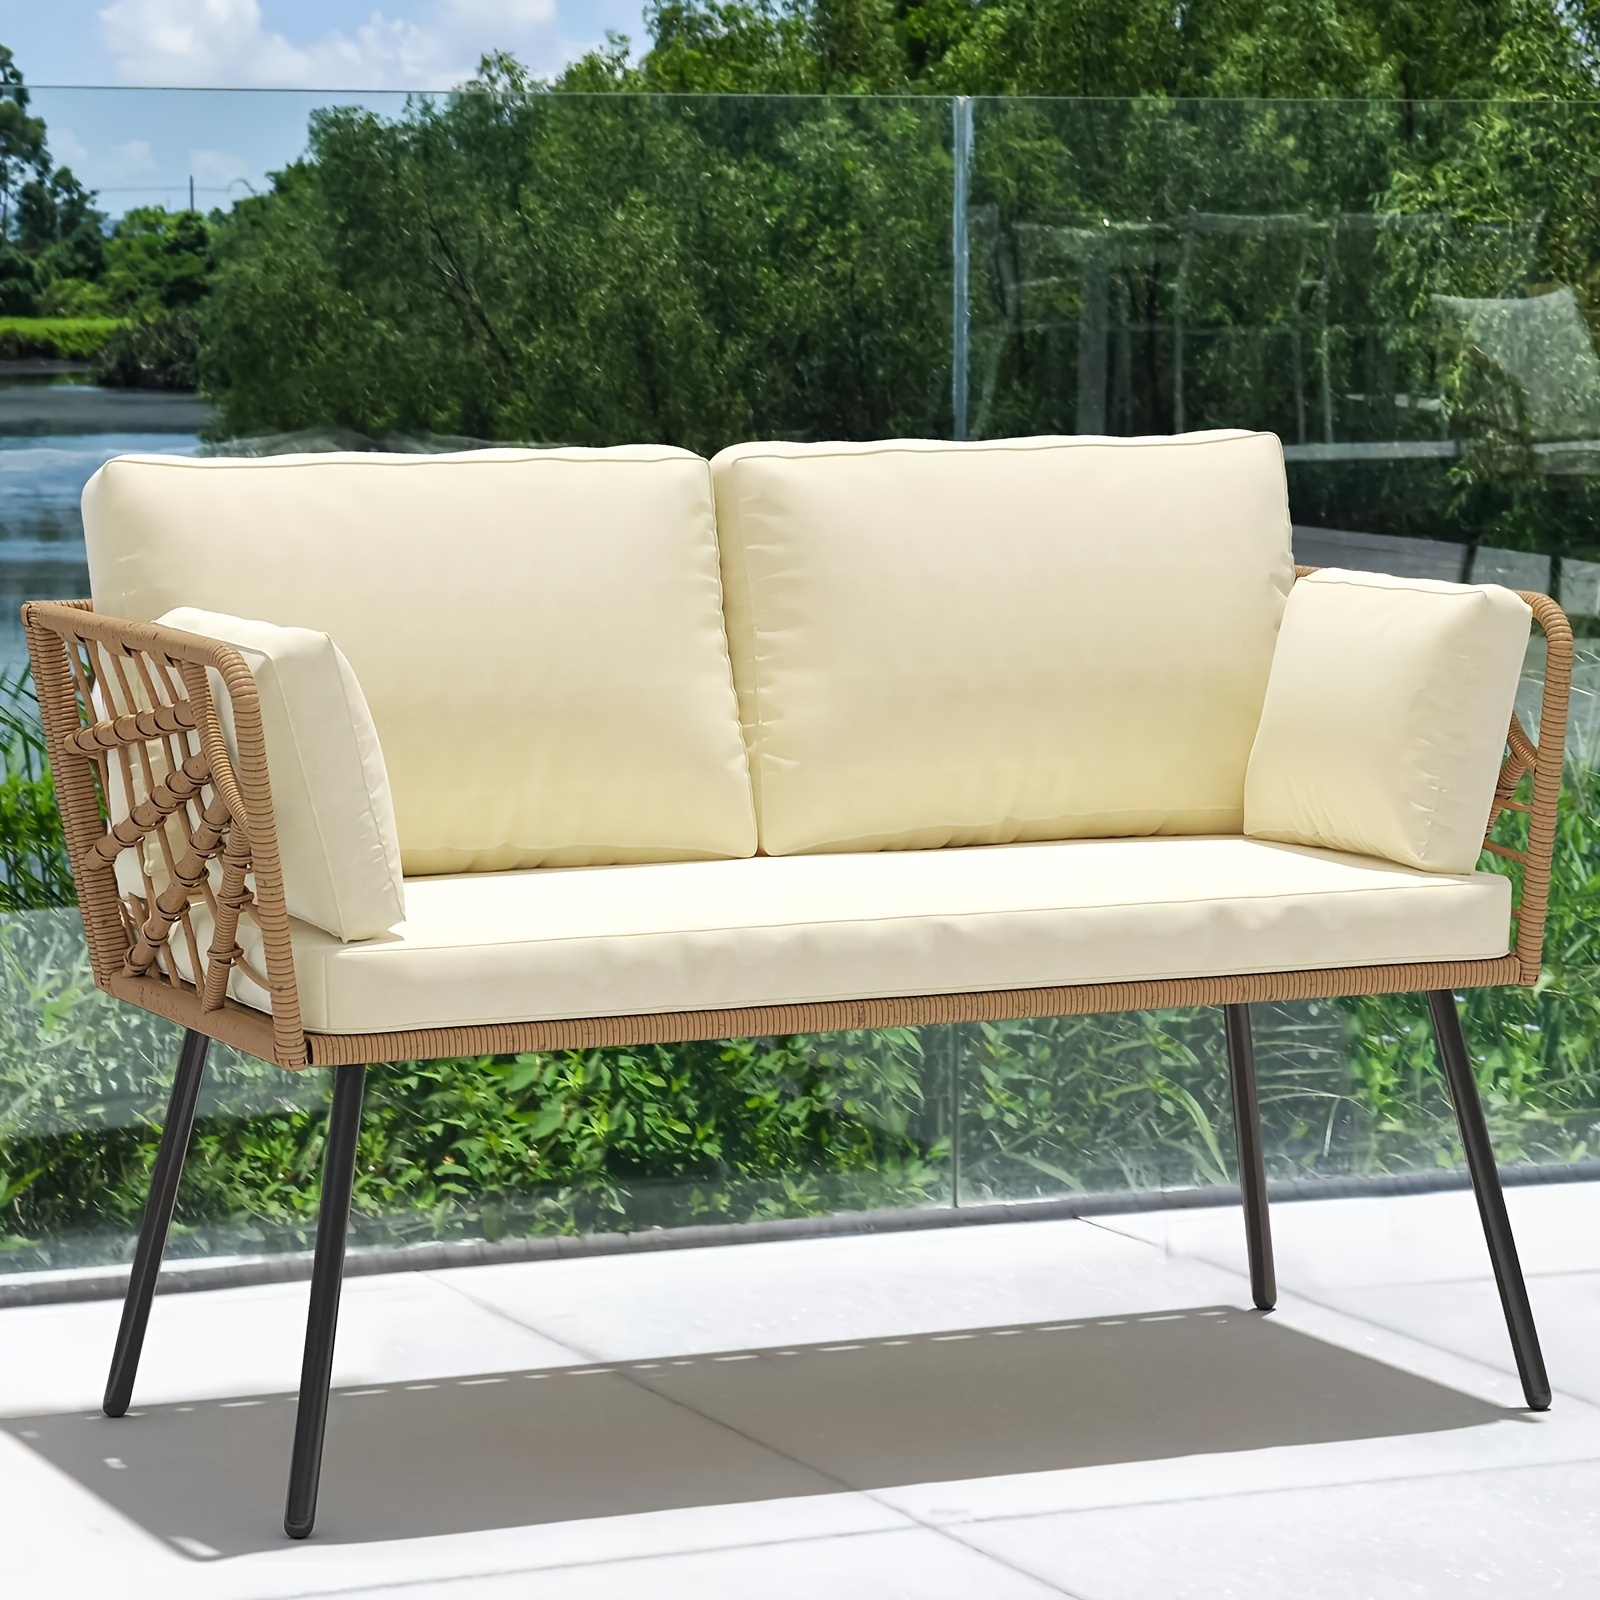 

Dwvo Outdoor Patio Sofa Loveseat Sofa Pe Wicker Sofa Furniture High Back With Cushion